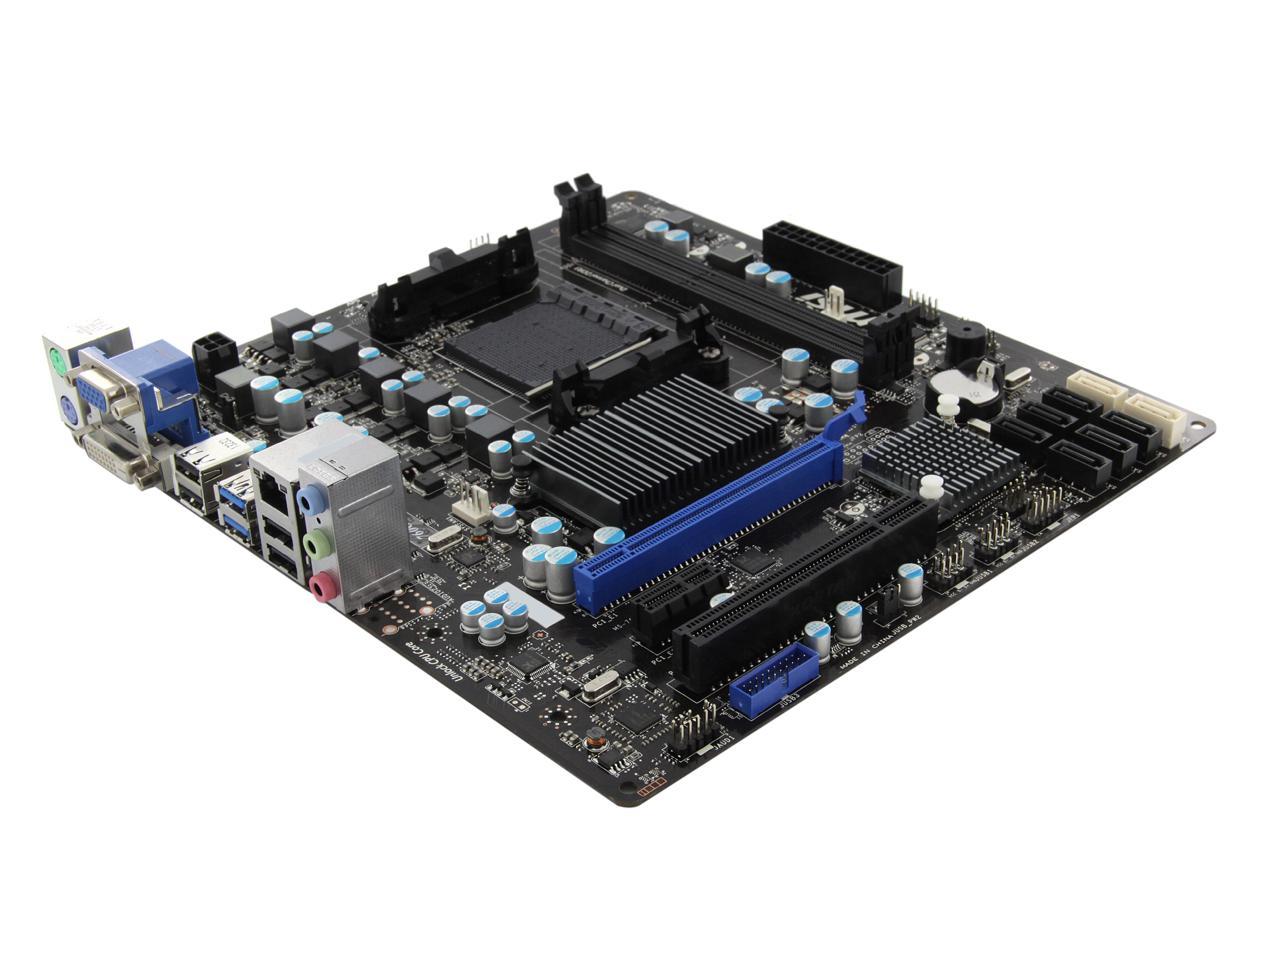 MSI 760GMA-P34 (FX) AM3+ Micro ATX AMD Motherboard - Newegg.com